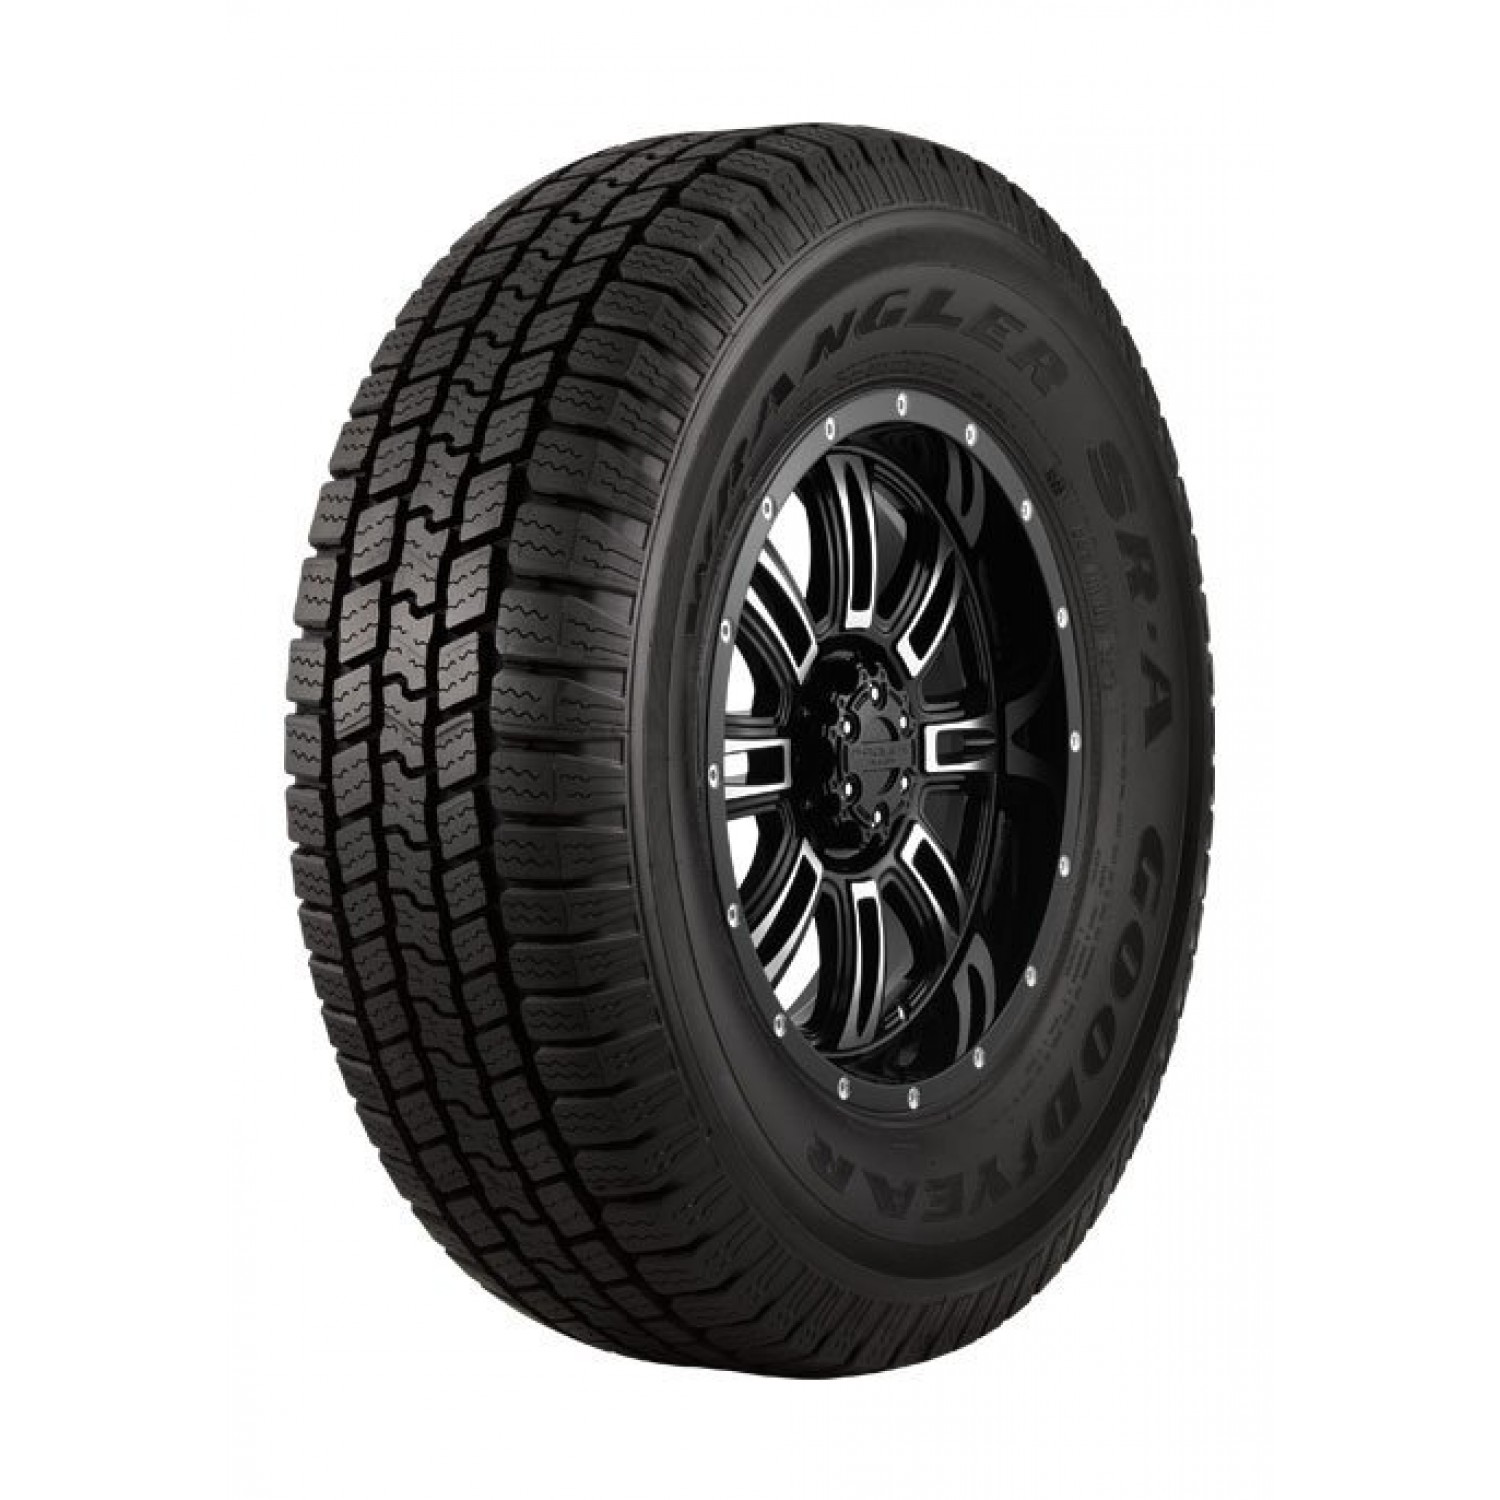 Goodyear Wrangler SR-A Black Sidewall Tire (P275/60R20 114S OEM: Nissan)  vzn121212